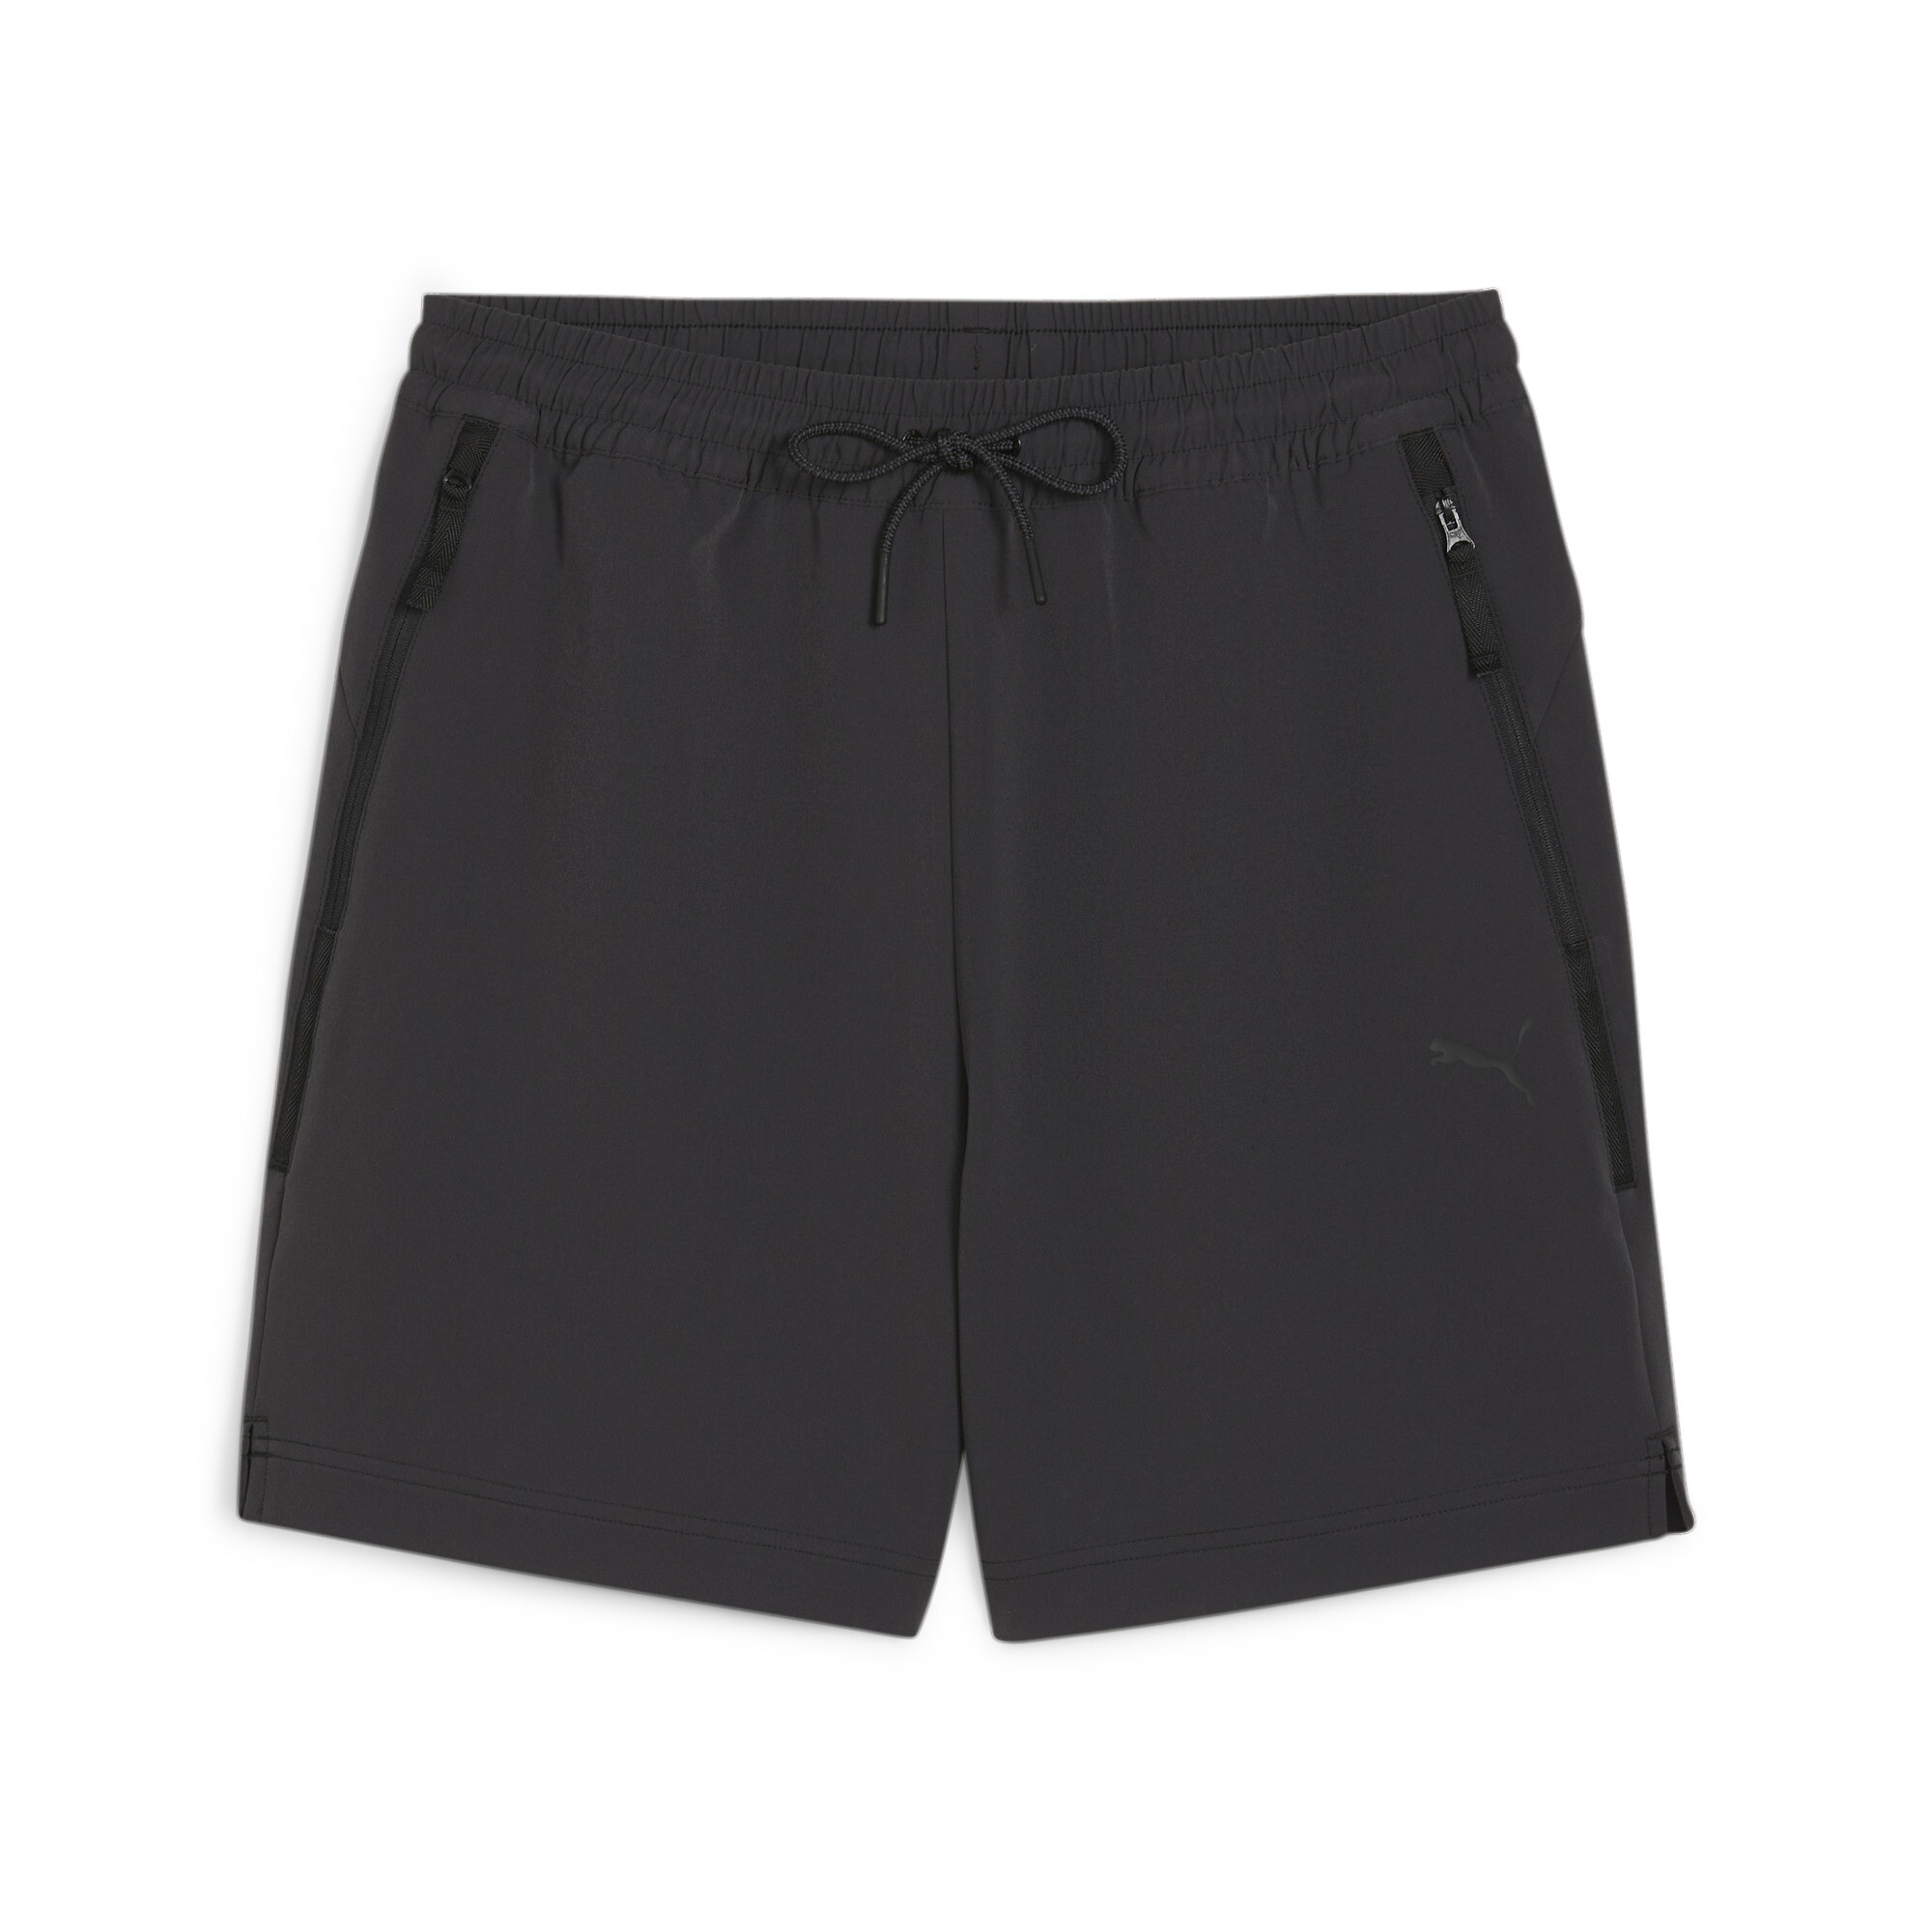 Men's PUMATECH Shorts In 10 - Black, Size Medium